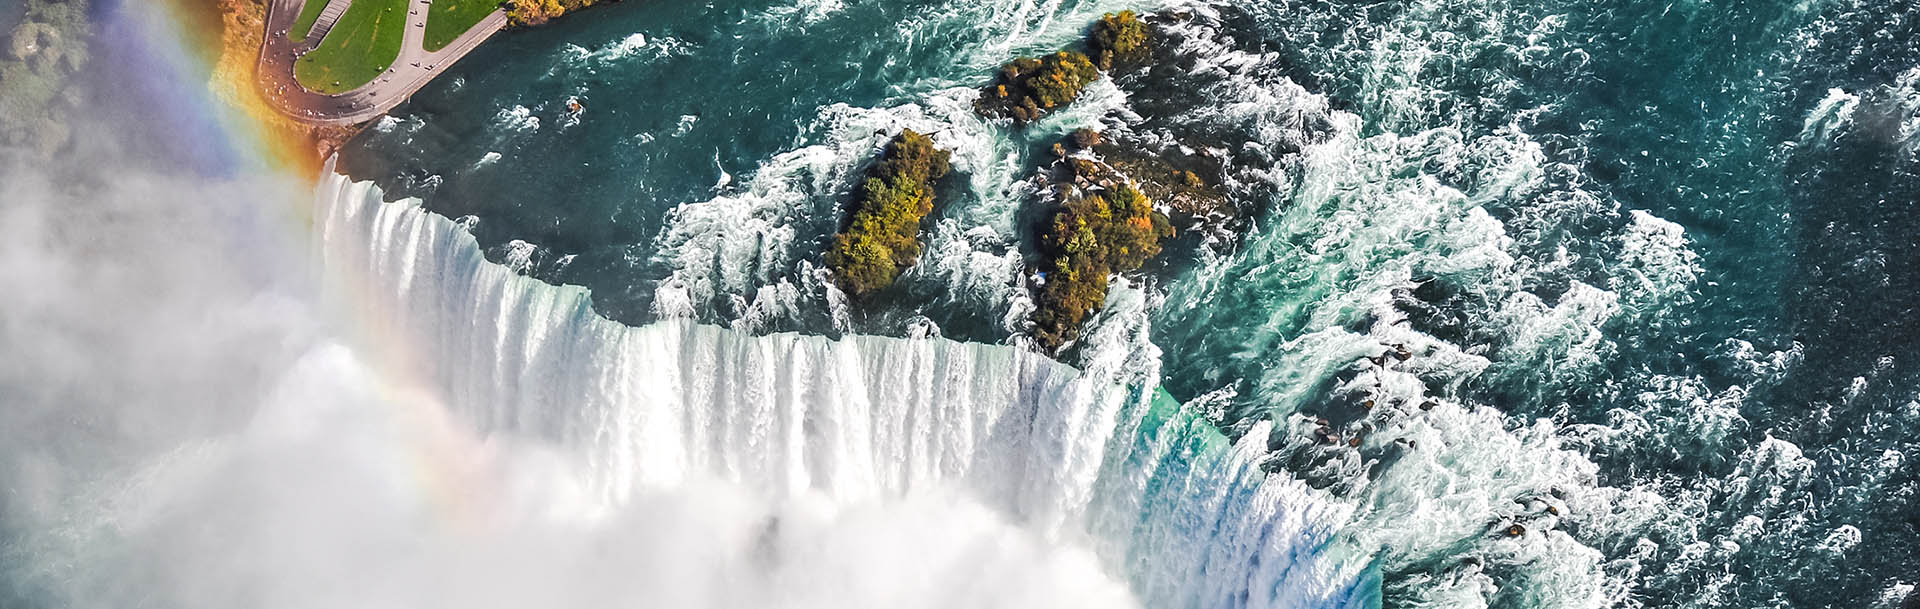 Cave Of The Winds - Niagara Falls